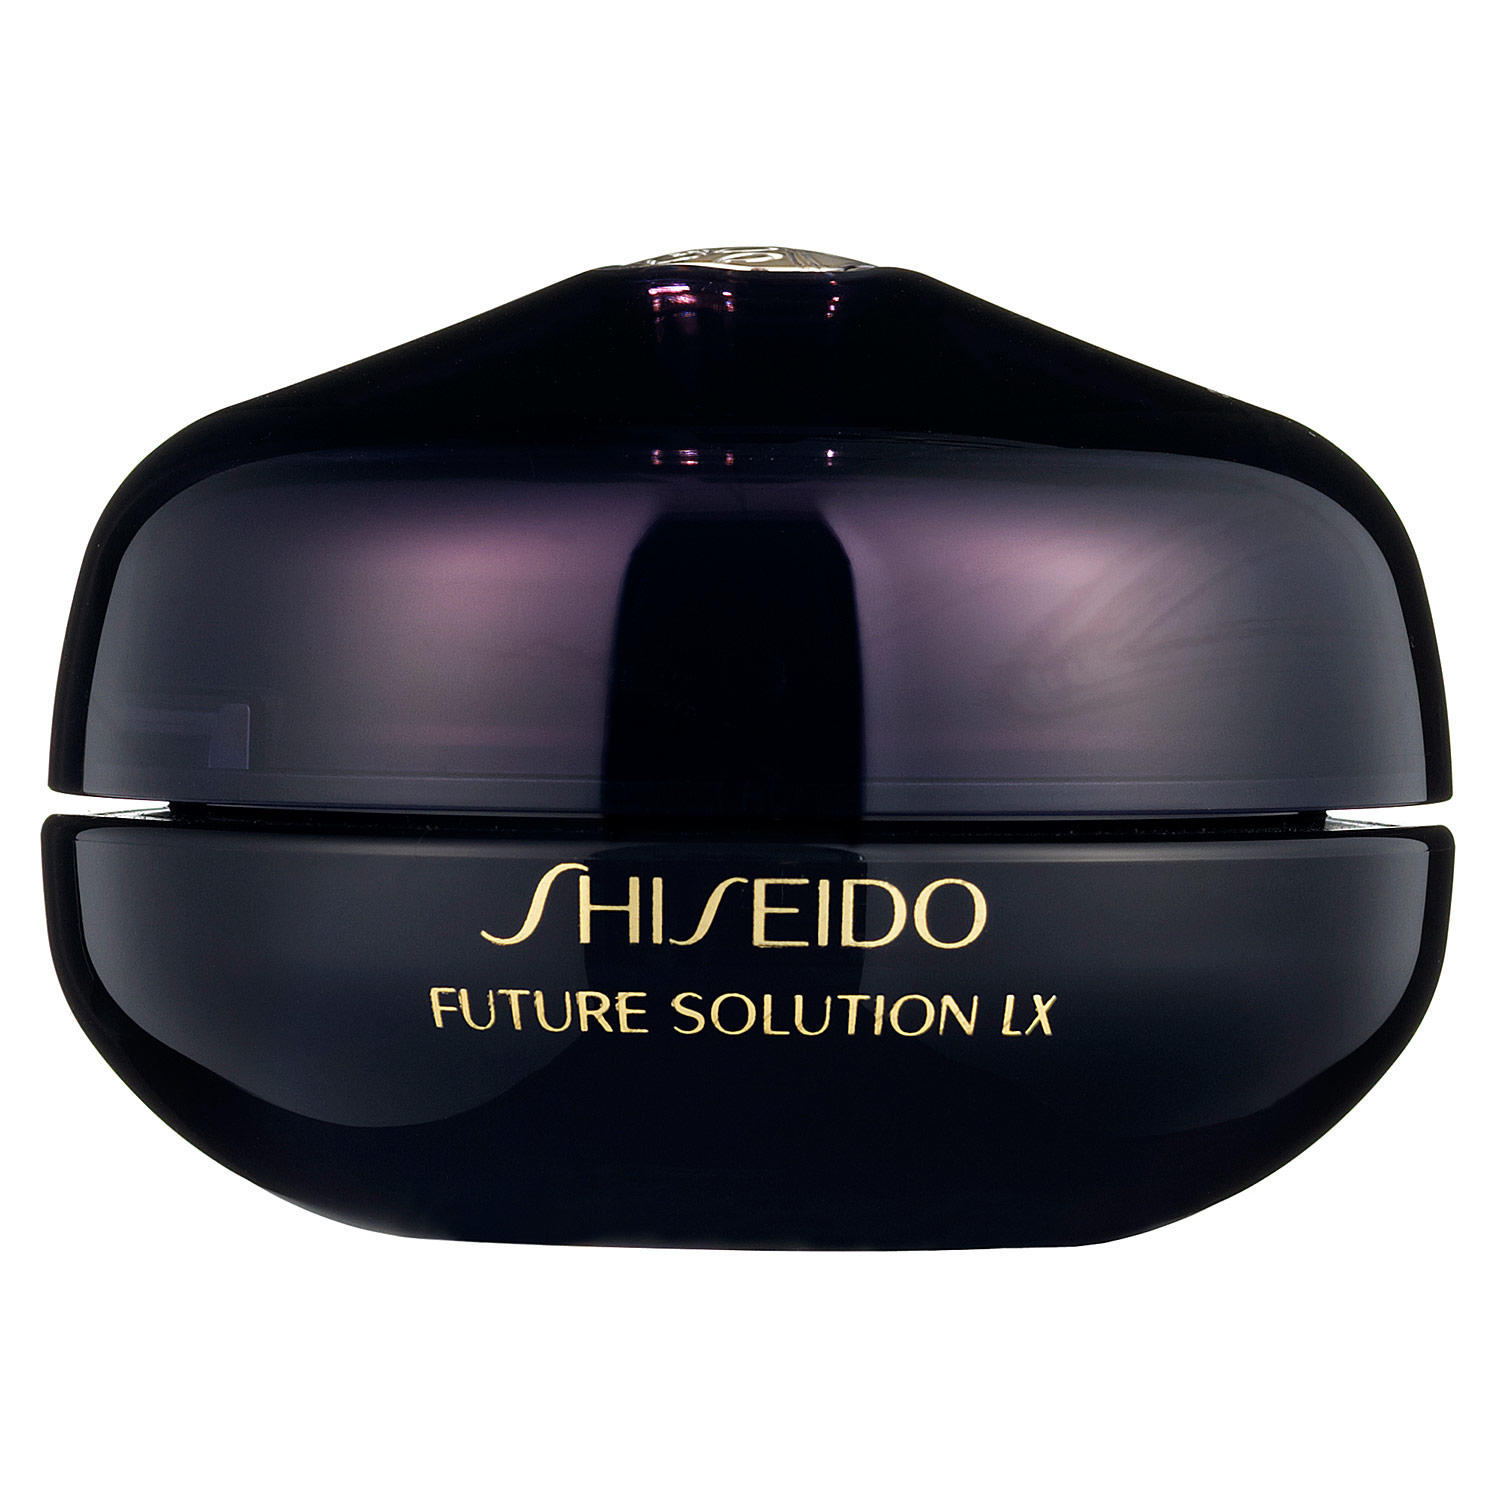 Shiseido solution. Крем Shiseido Future solution. Шисейдо крем Future solution LX. Shiseido Future solution LX Eye and Lip Contour Regenerating Cream e. Тональный крем Shiseido Future solution LX тон Neutral.